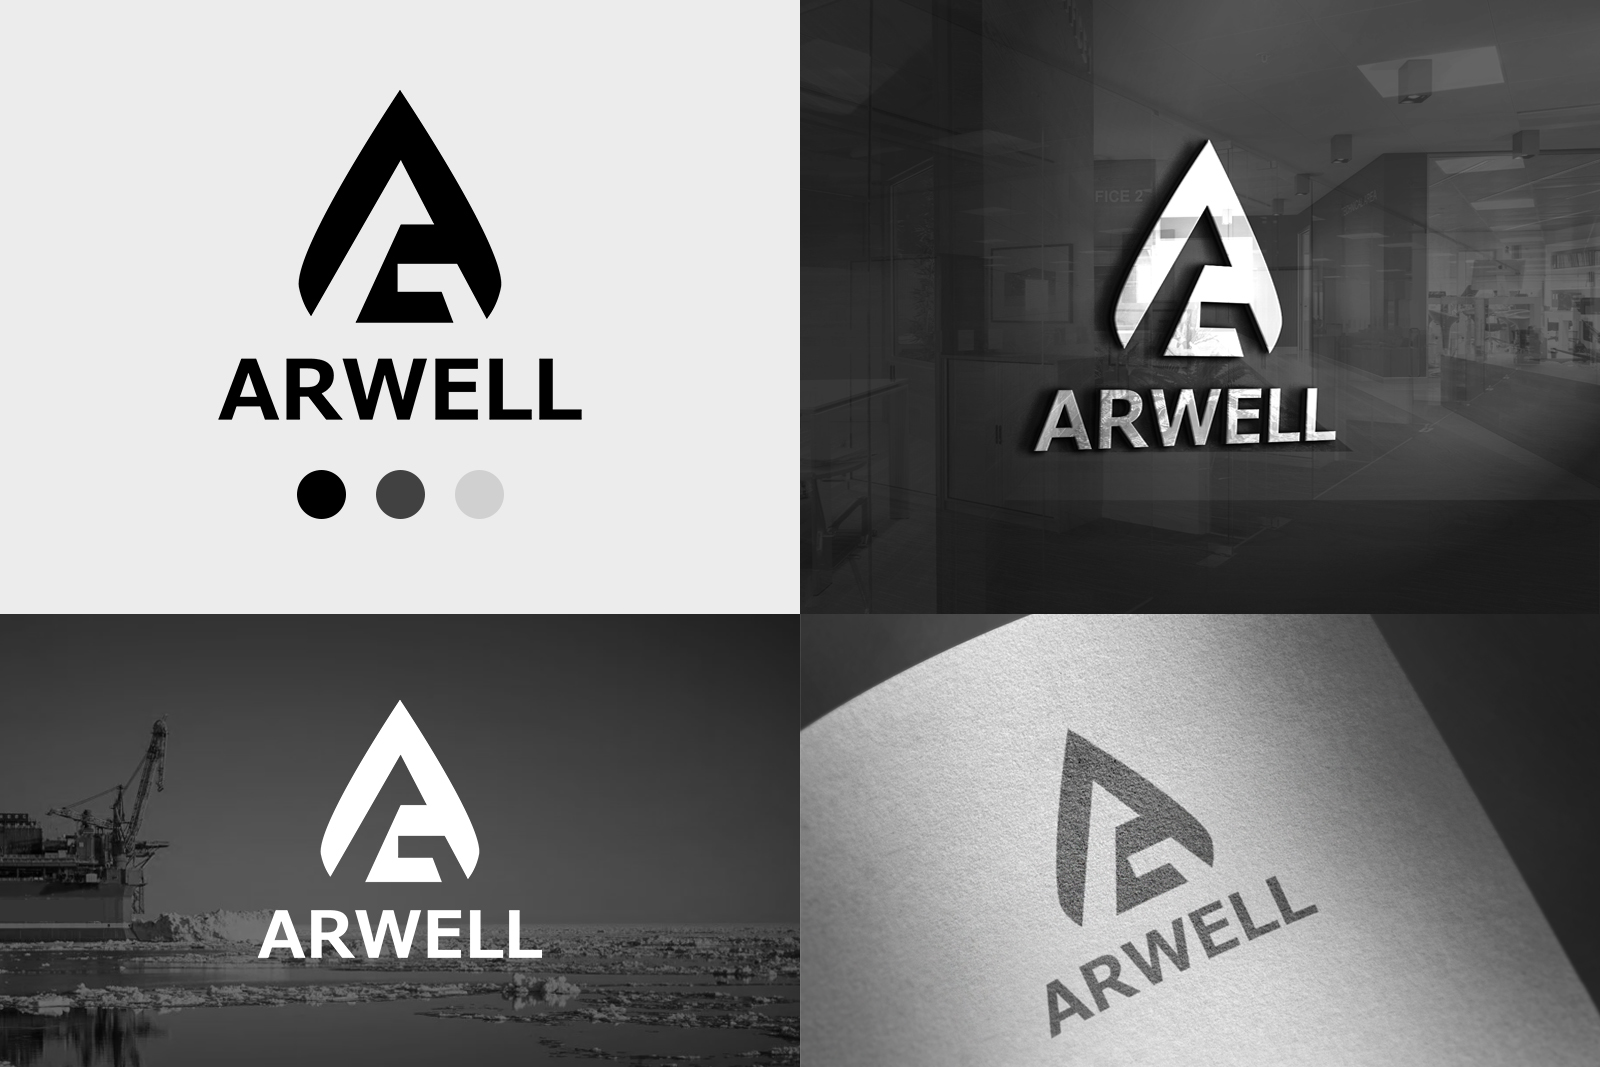 Arwell (Нефтяная компания, добыча нефти в Антарктиде)